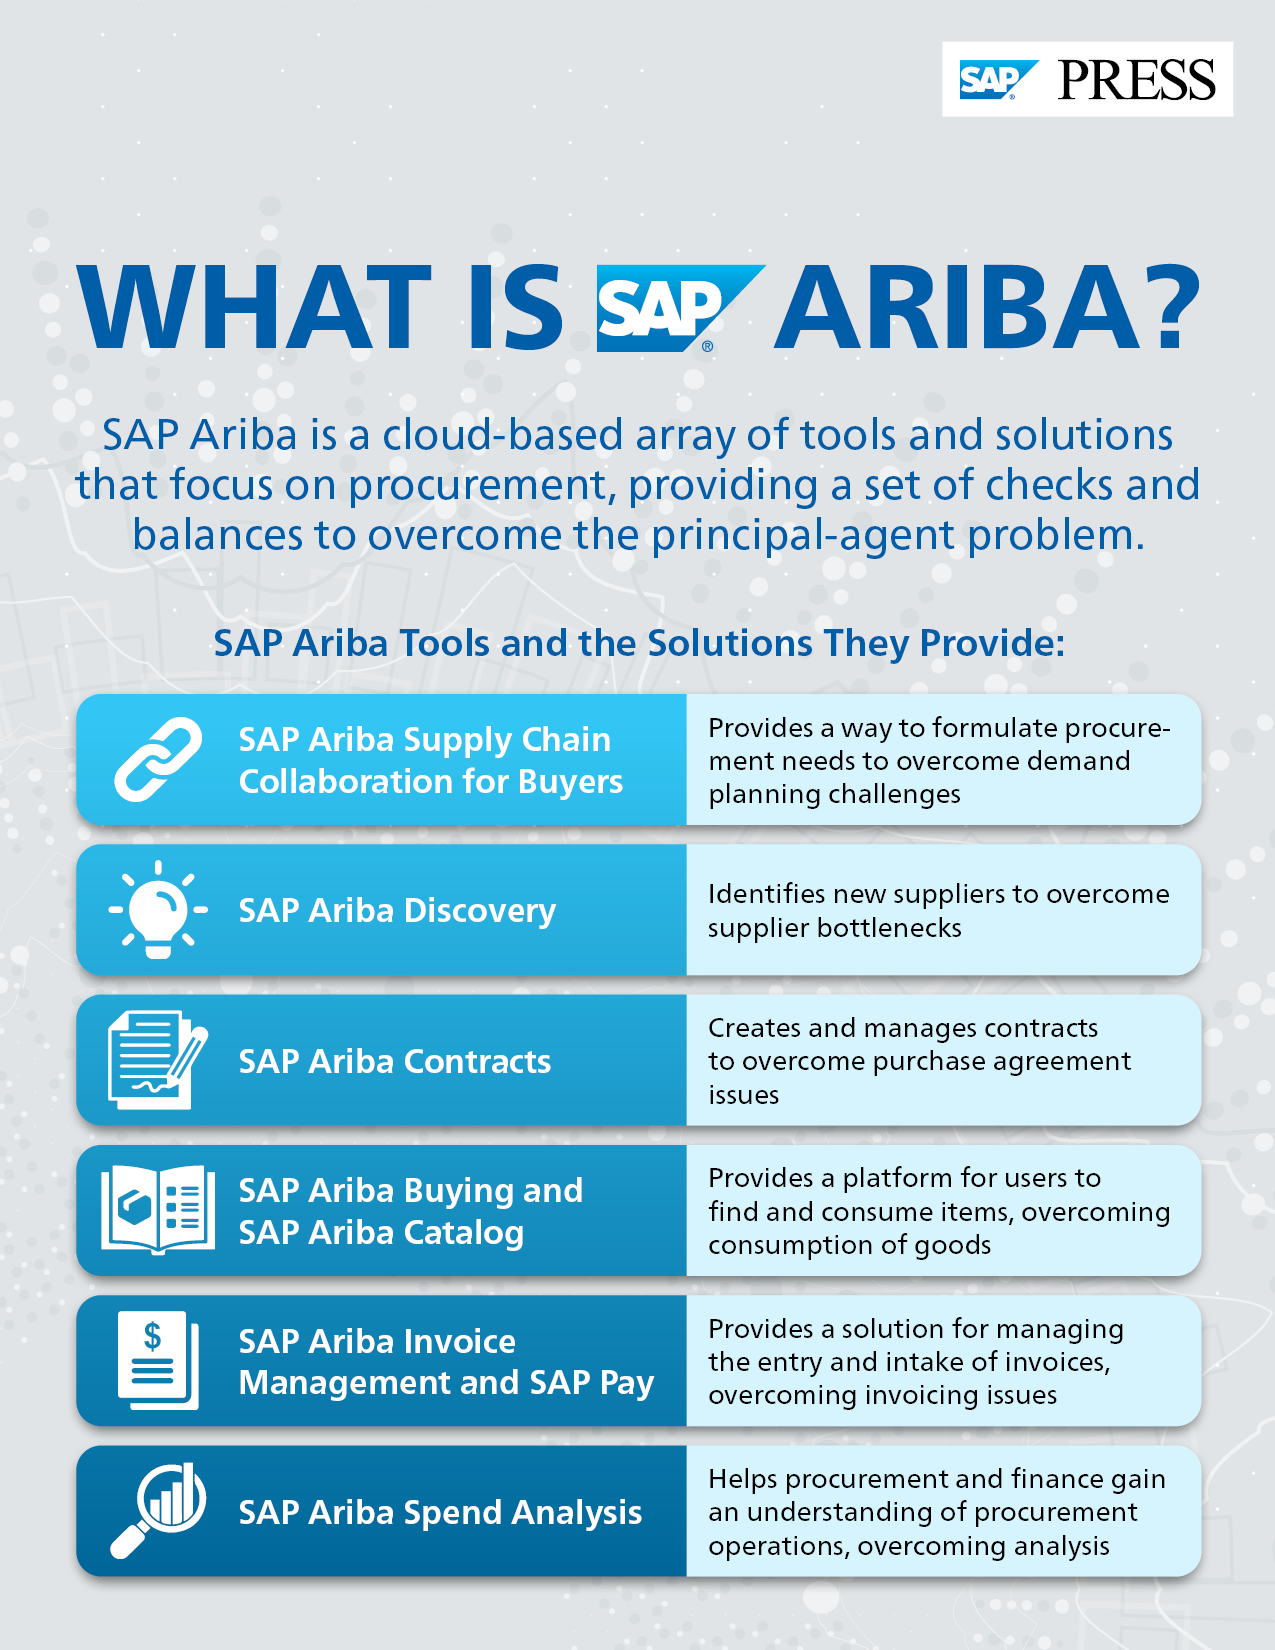 What Is SAP Ariba?